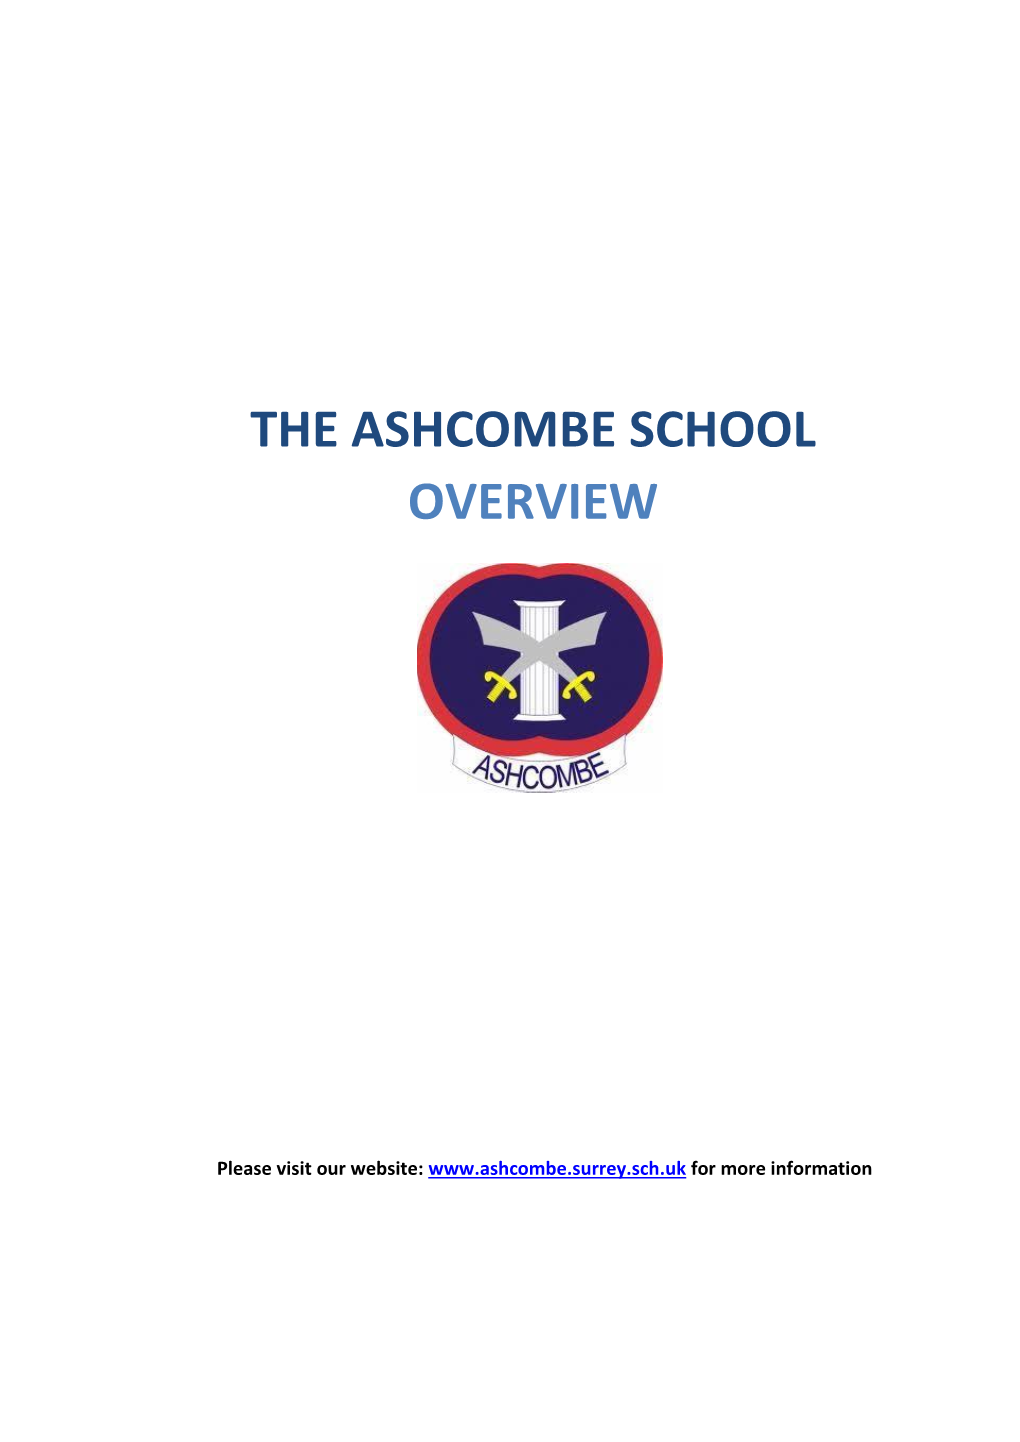 The Ashcombe School